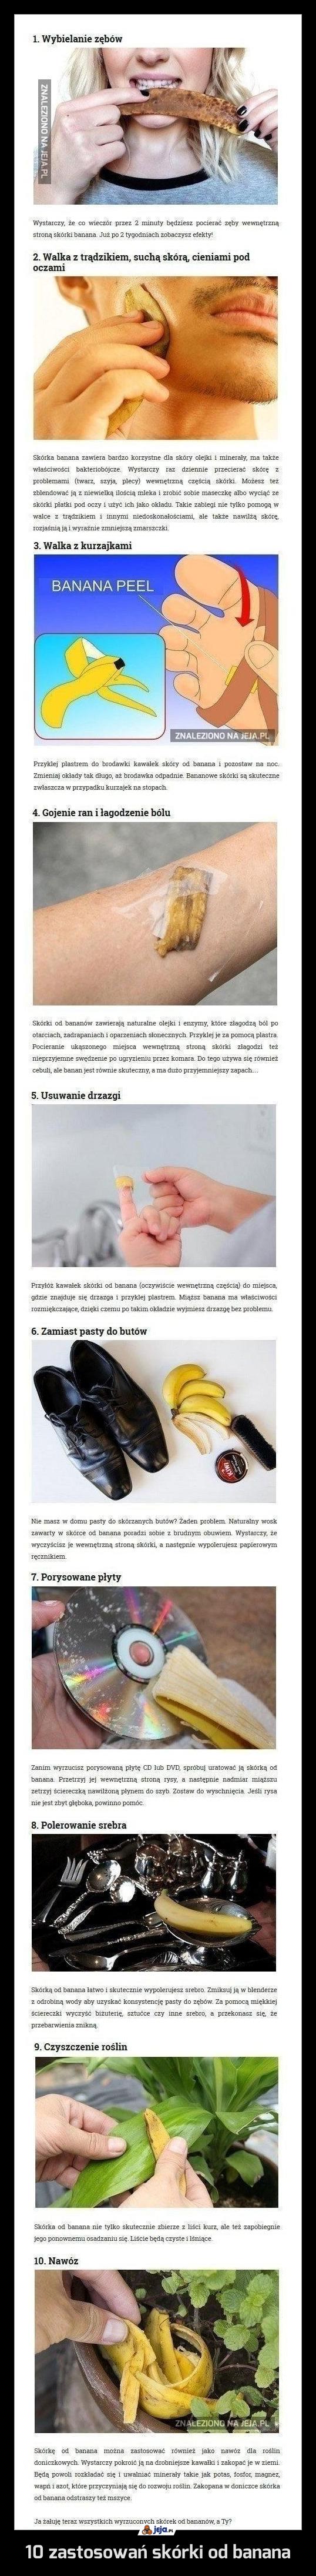 10 zastosowań skórki od banana